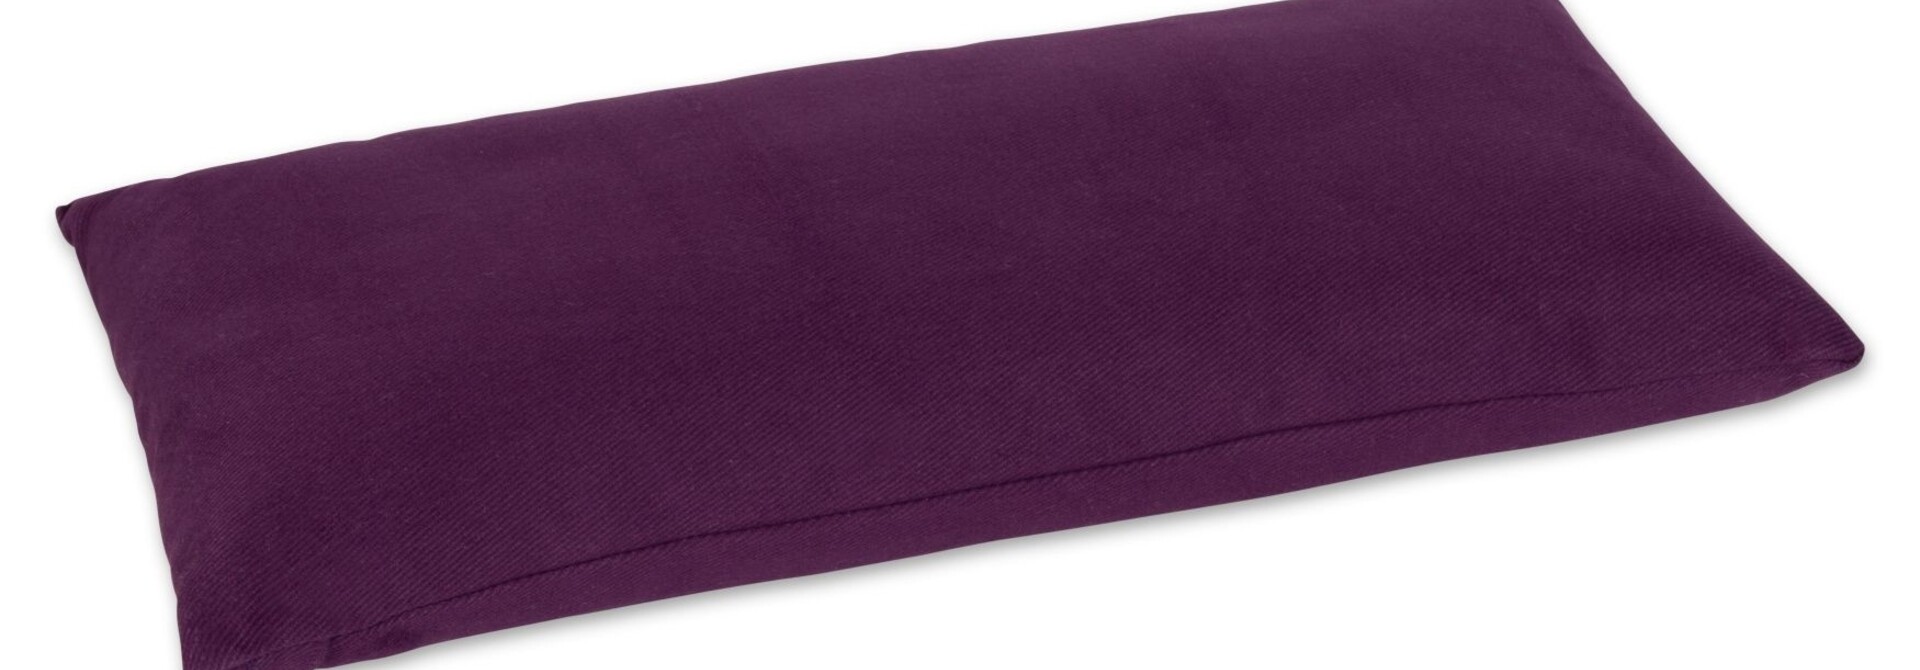 Yogisha Meditation Bench Cushion Deluxe